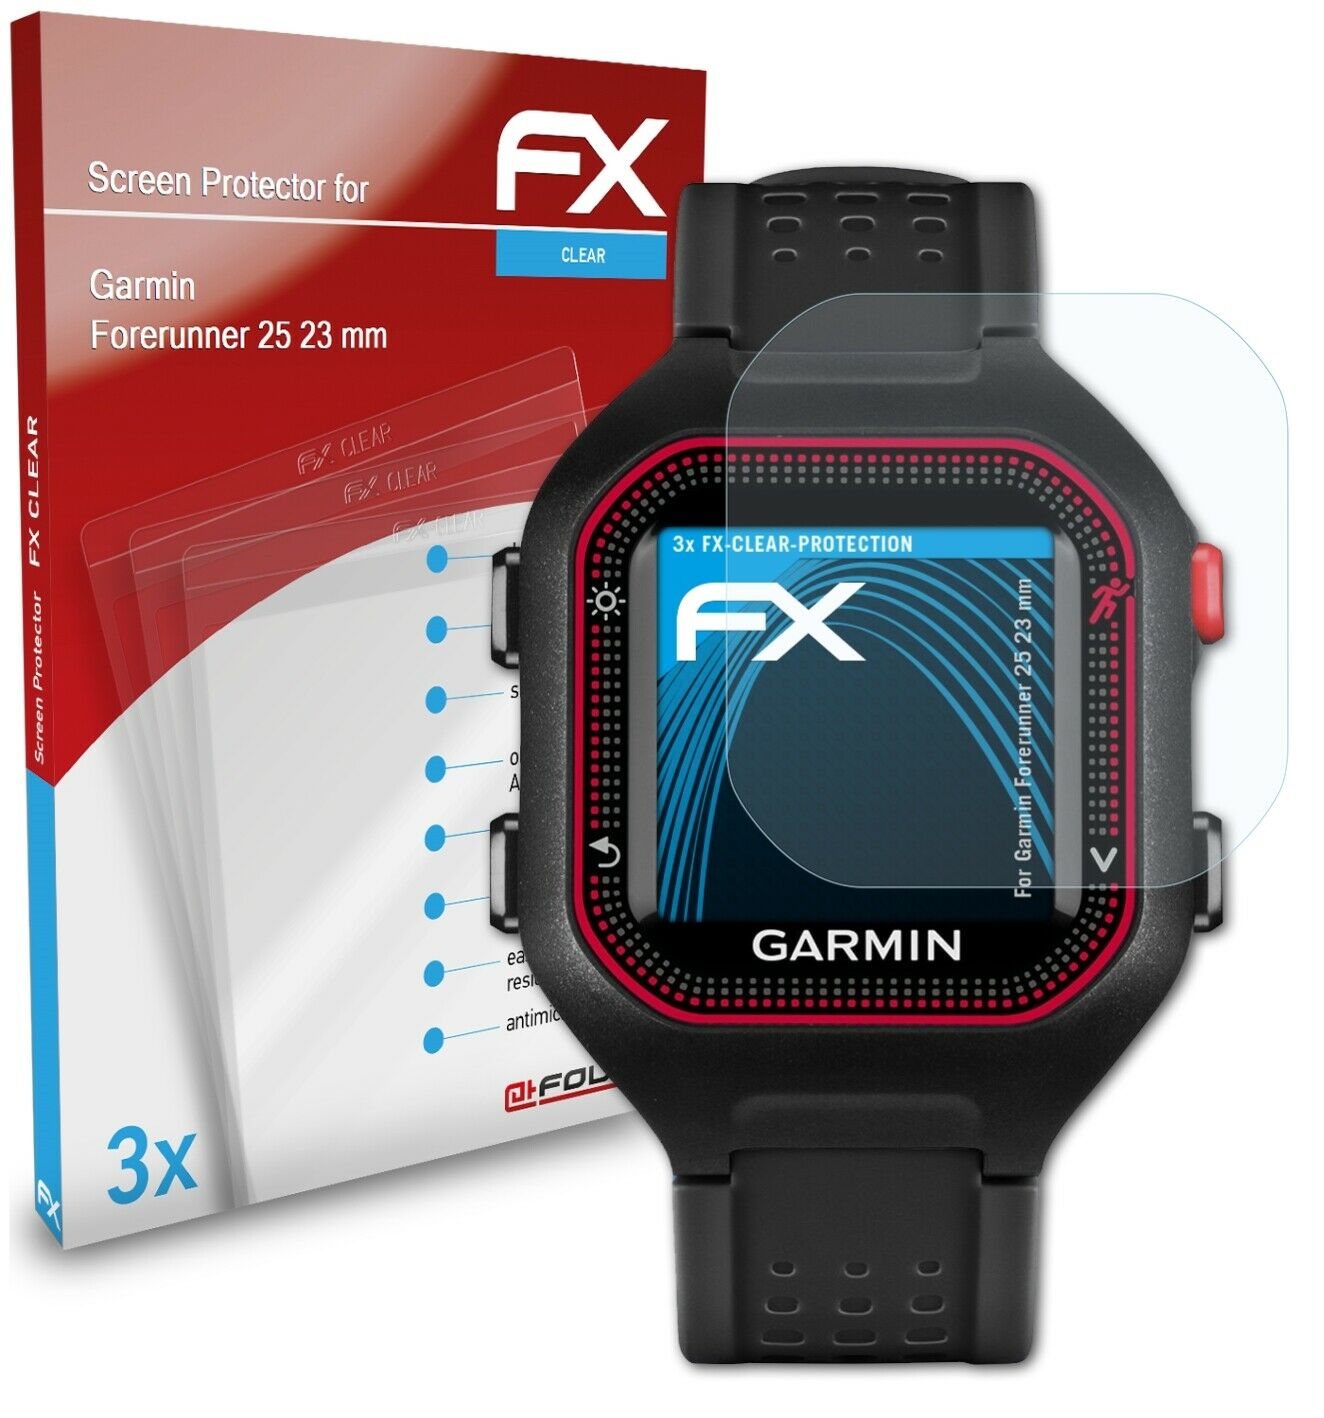 atFoliX 3x Screen Protector for Garmin Forerunner 25 23 mm clear